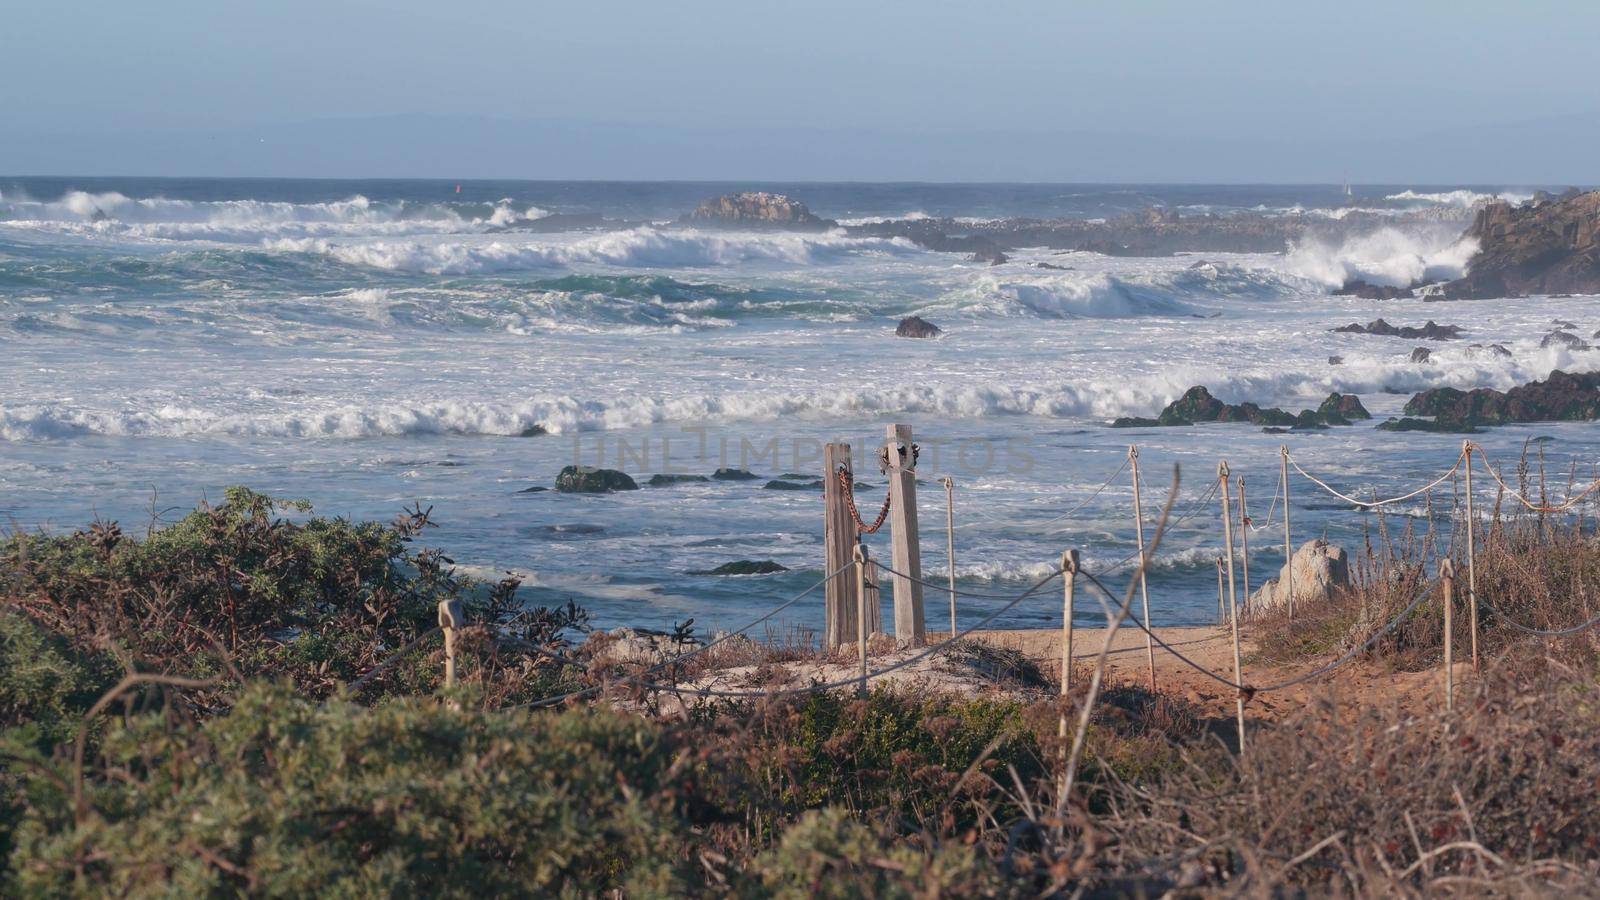 Big huge stormy sea waves crashing on rocky craggy beach, California ocean coast by DogoraSun